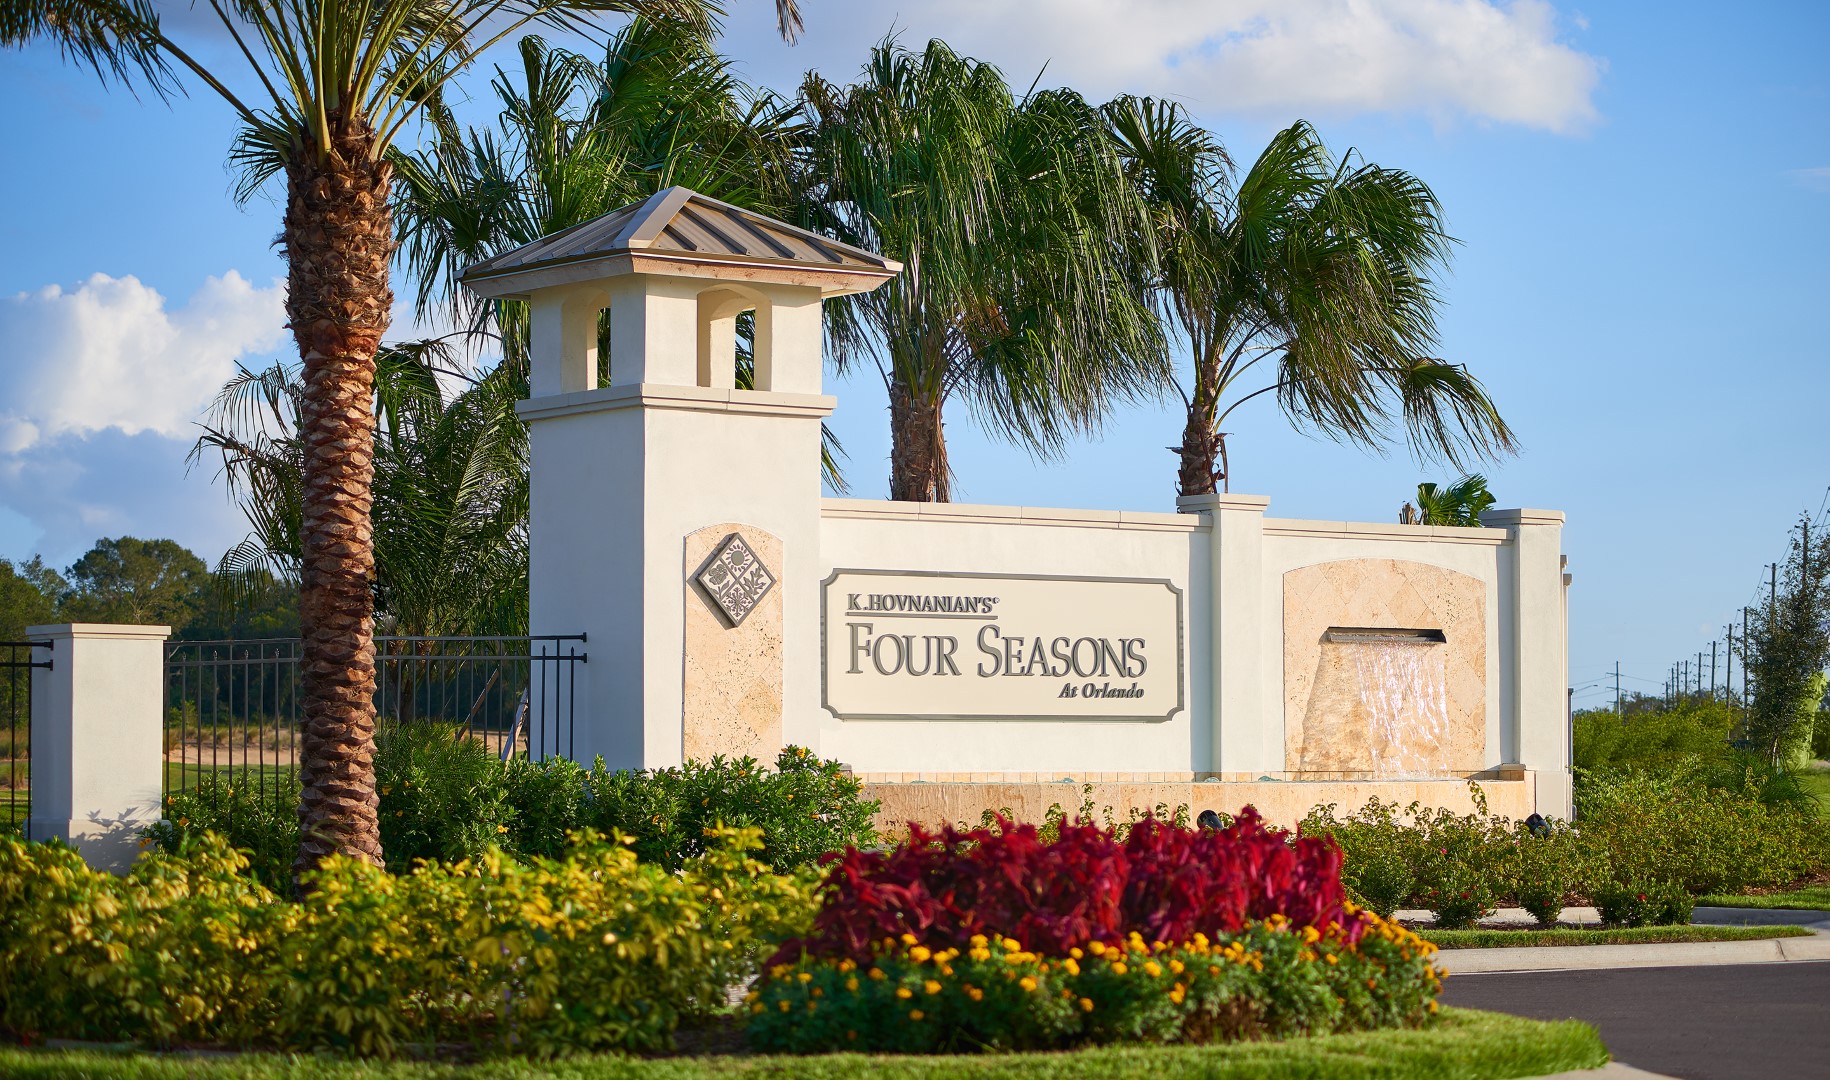 K. Hovnanian Four Seasons at Orlando | 55+ Community near Orlando FL